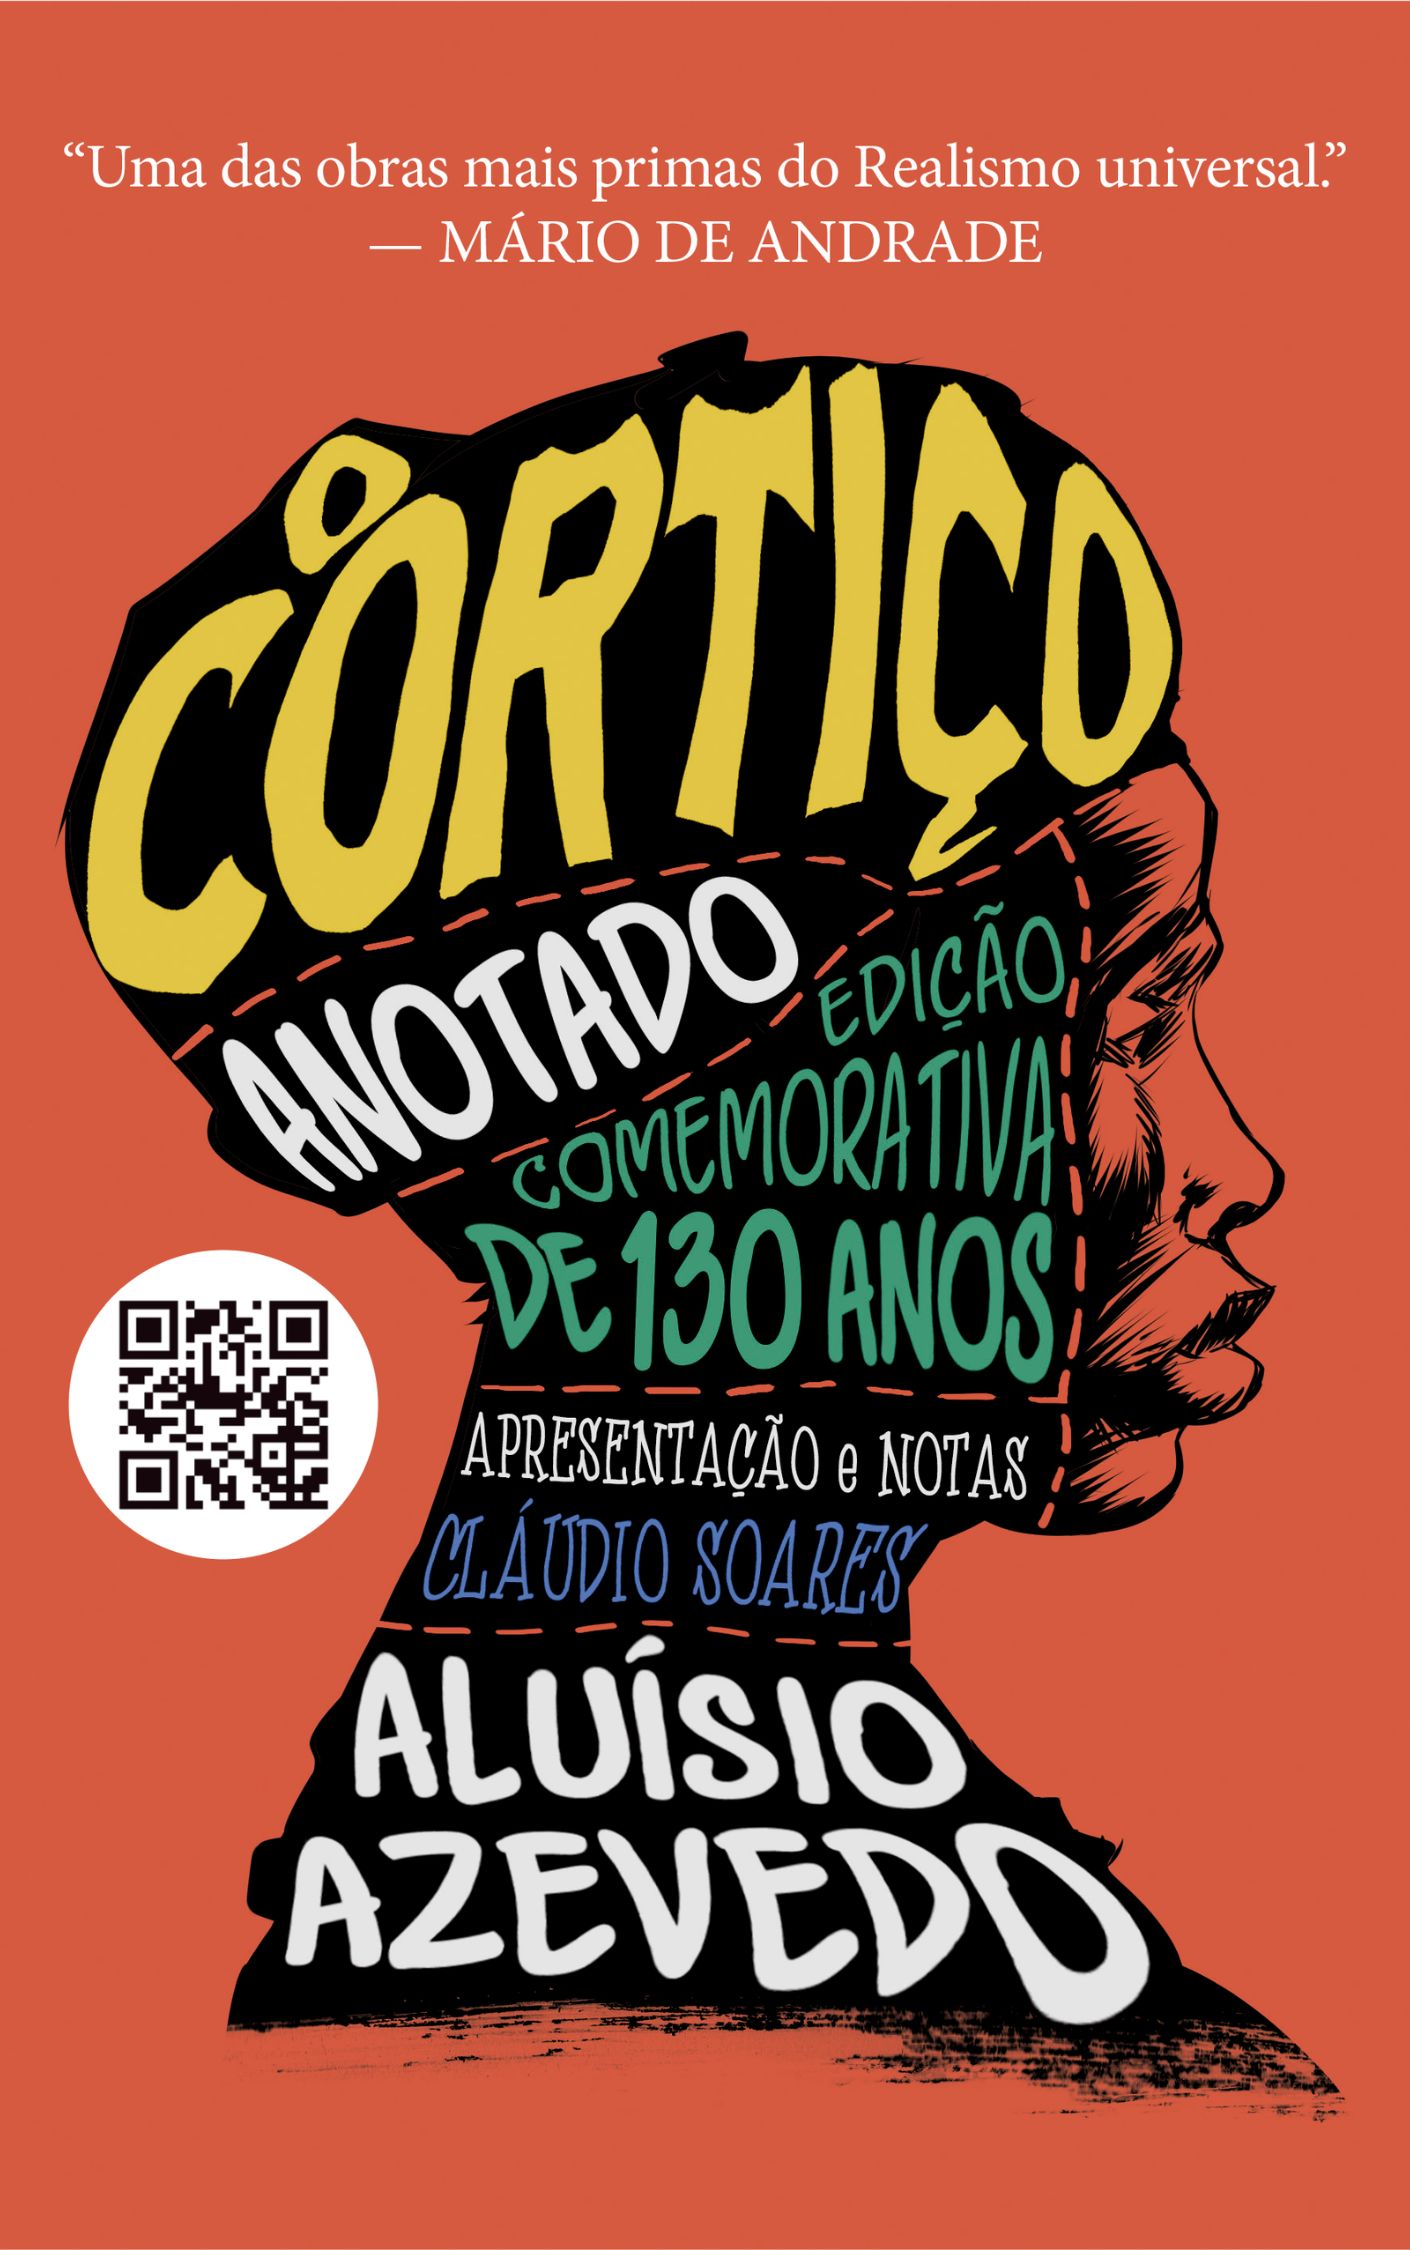 O Cortiço by Aluísio Azevedo